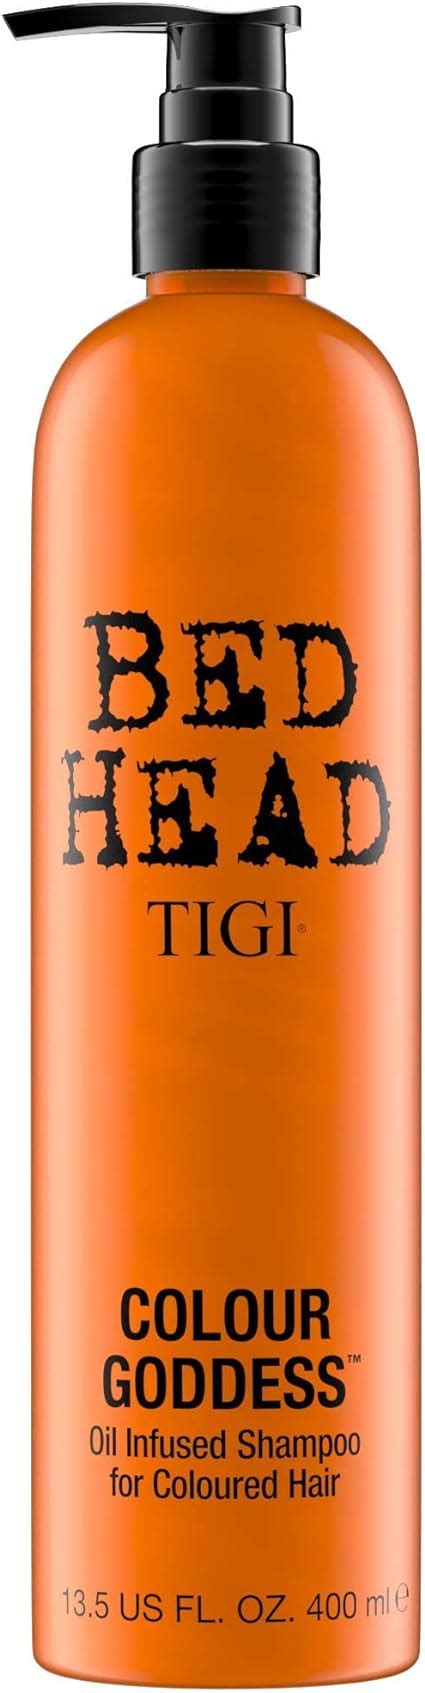 Bed Head By Tigi Colour Goddess Shampoo For Coloured Hair Ml